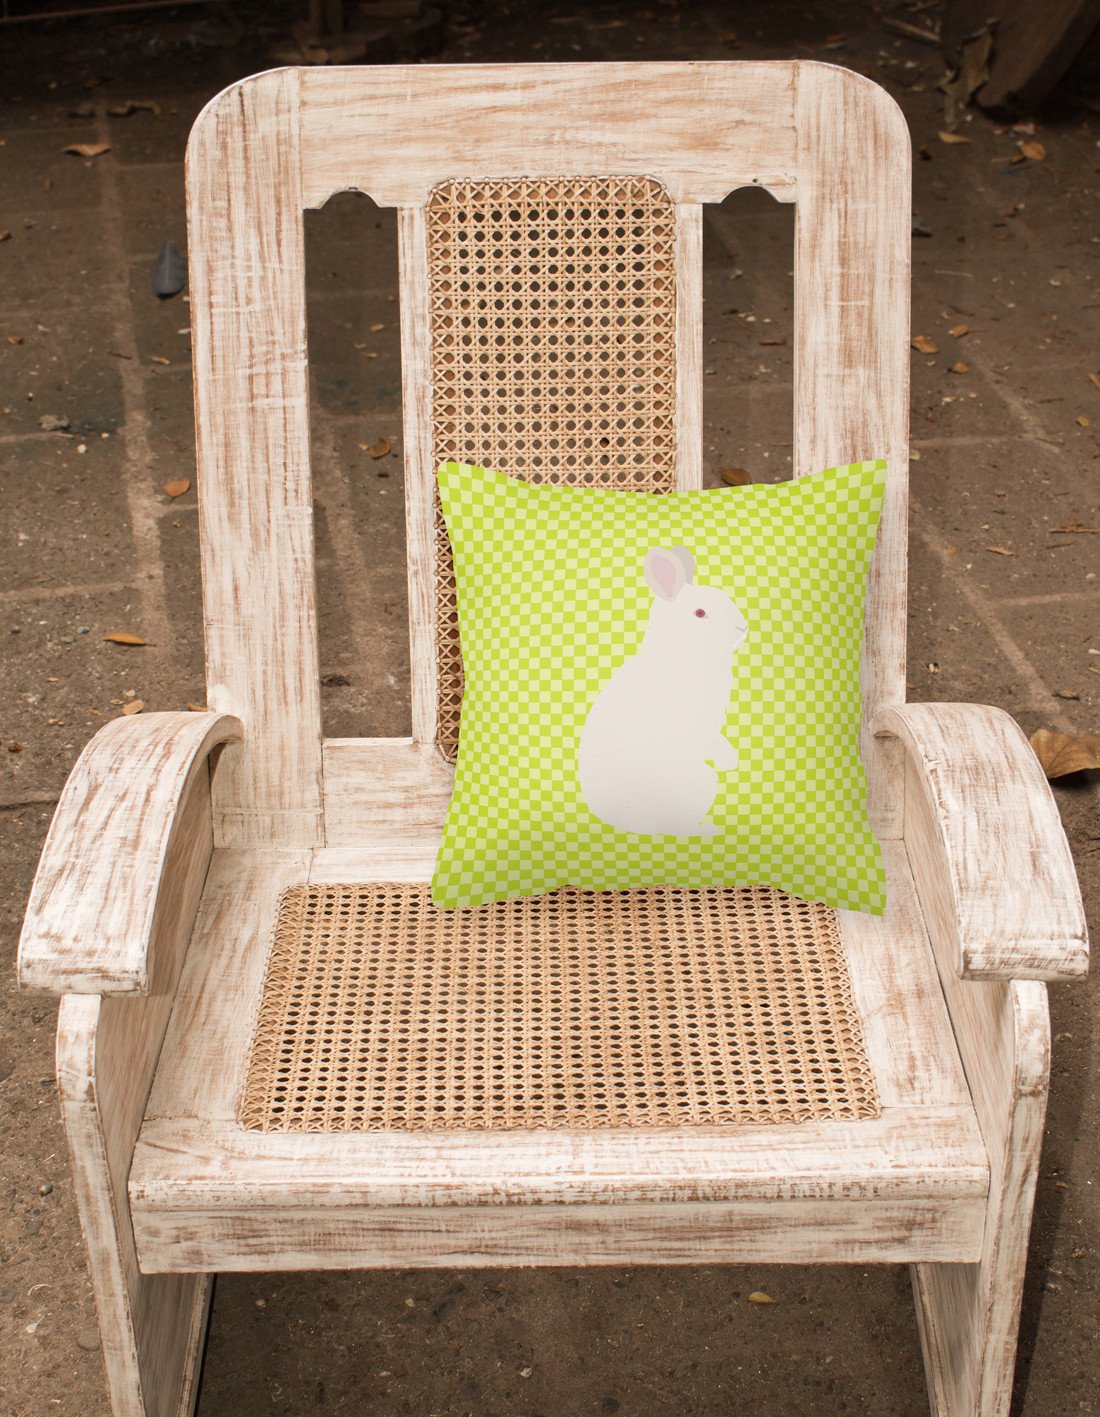 New Zealand White Rabbit Green Fabric Decorative Pillow BB7791PW1818 by Caroline's Treasures